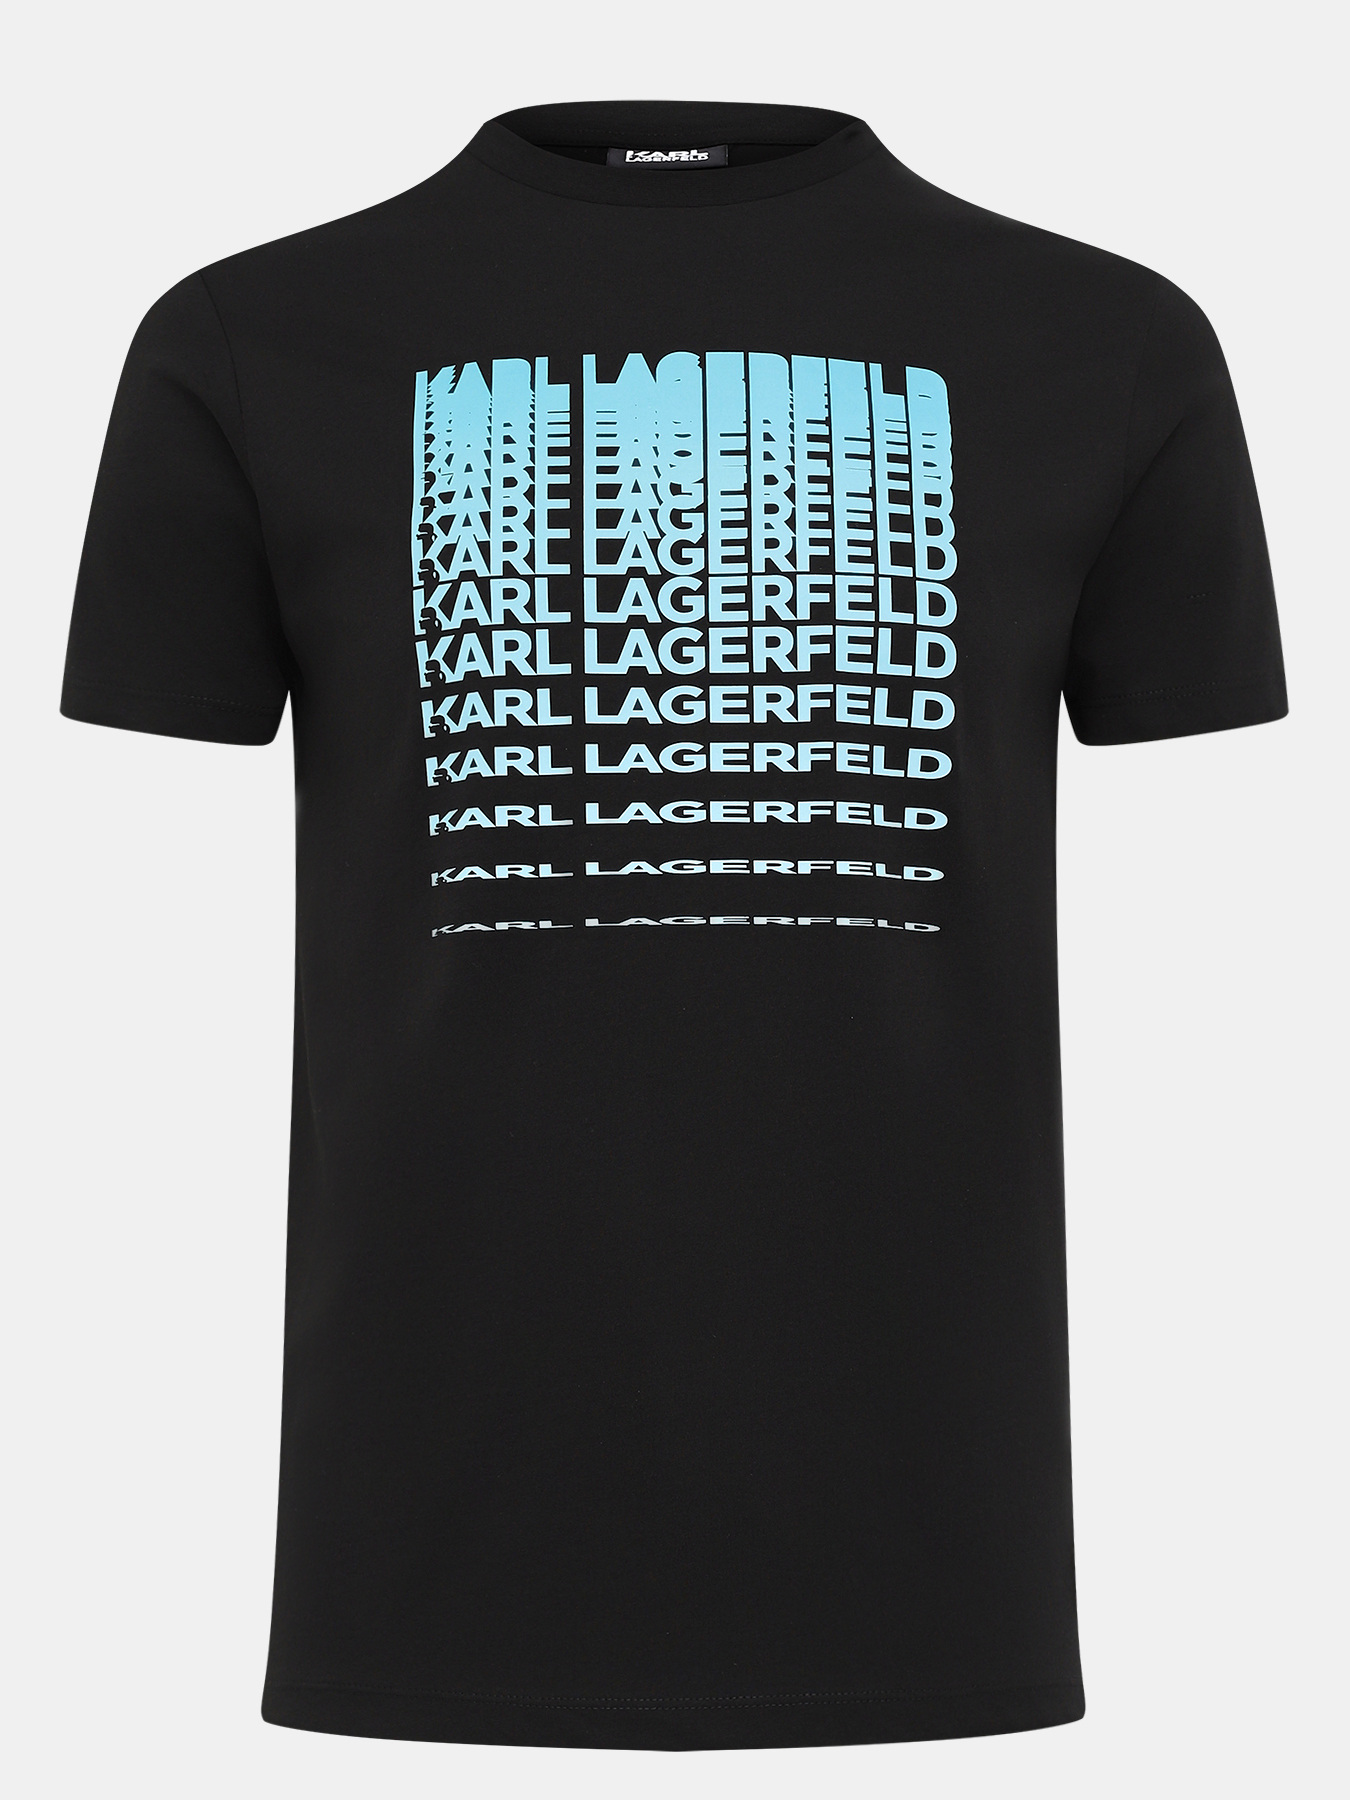 Футболки лагерфельд купить. Karl Lagerfeld футболка мужская. Футболка Karl Lagerfeld мужская черная.